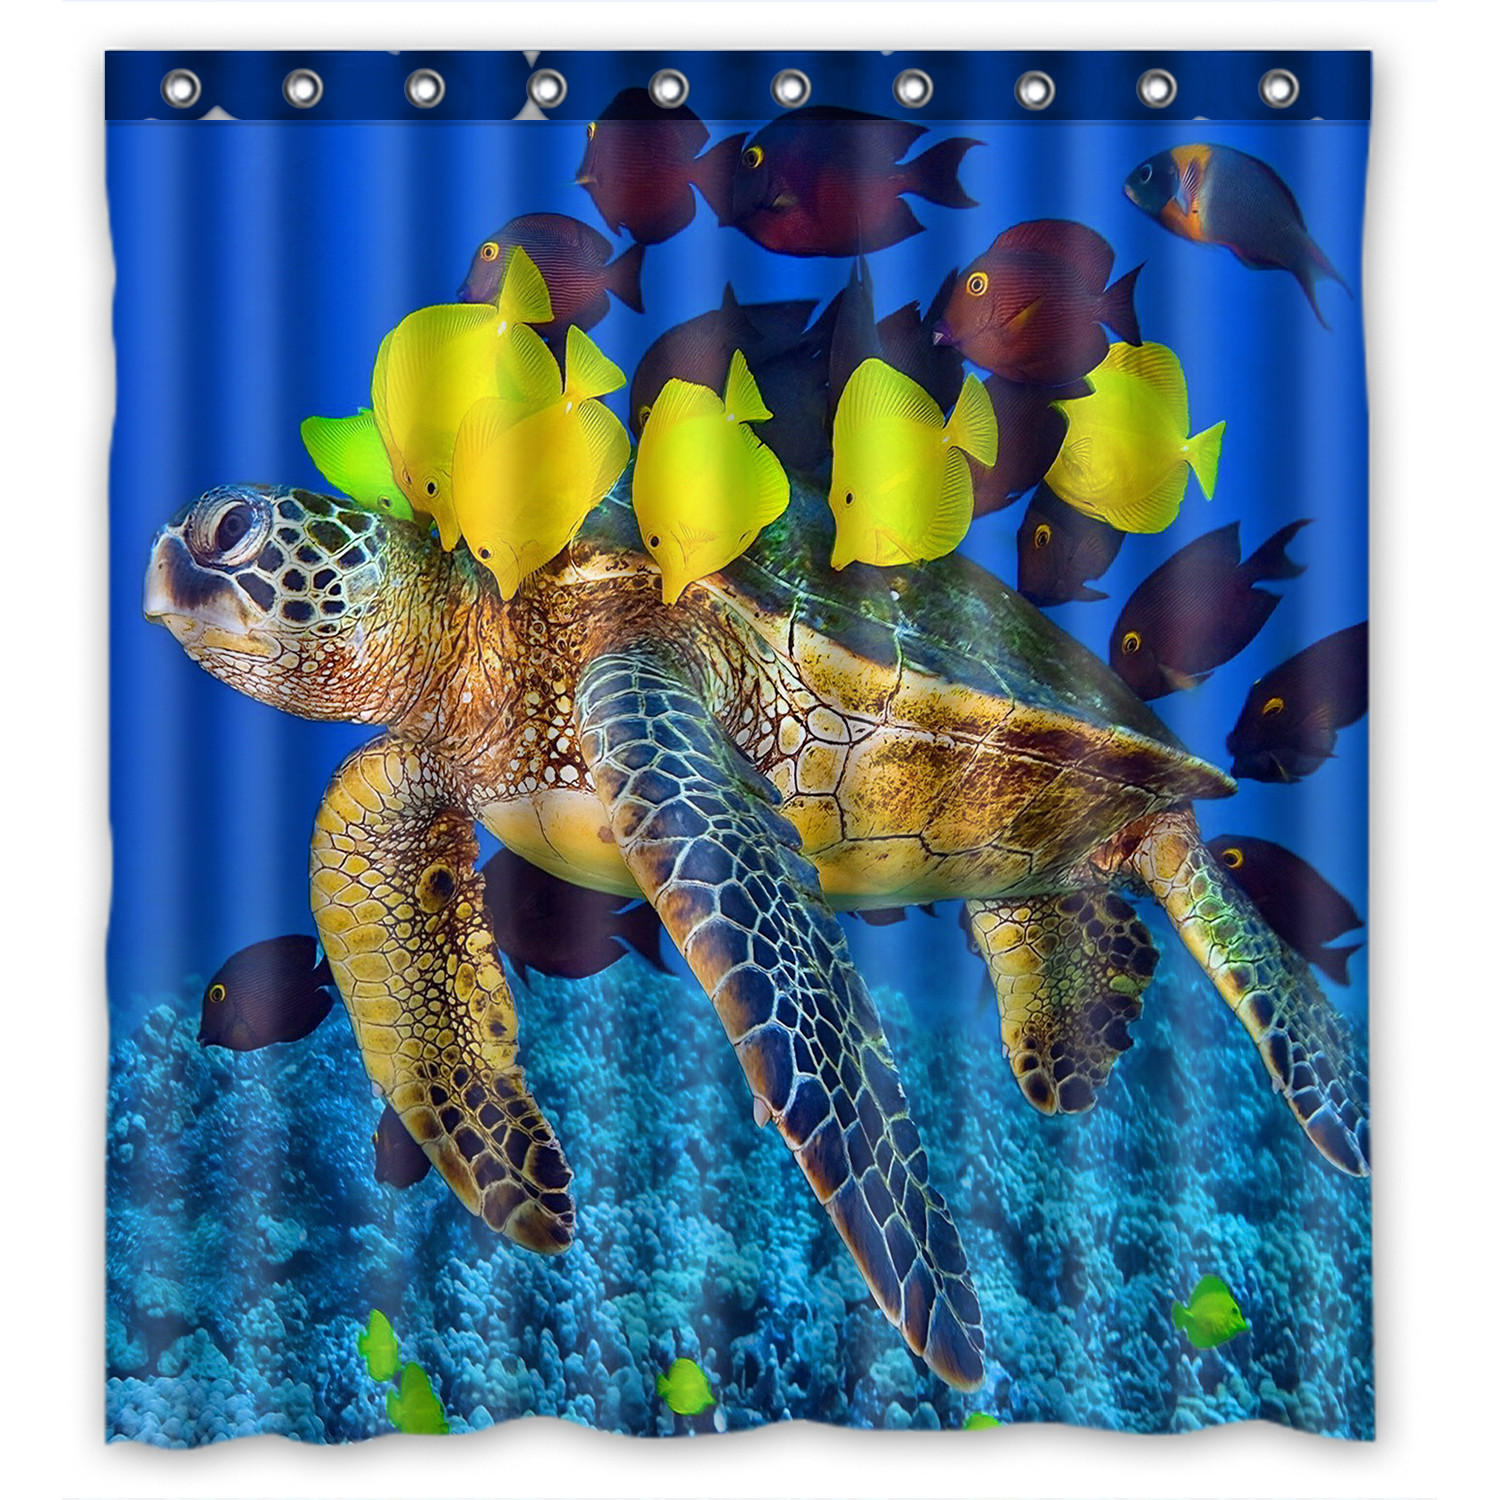 Turtle Bathroom Decor
 ZKGK Sea Turtle Painting Waterproof Shower Curtain